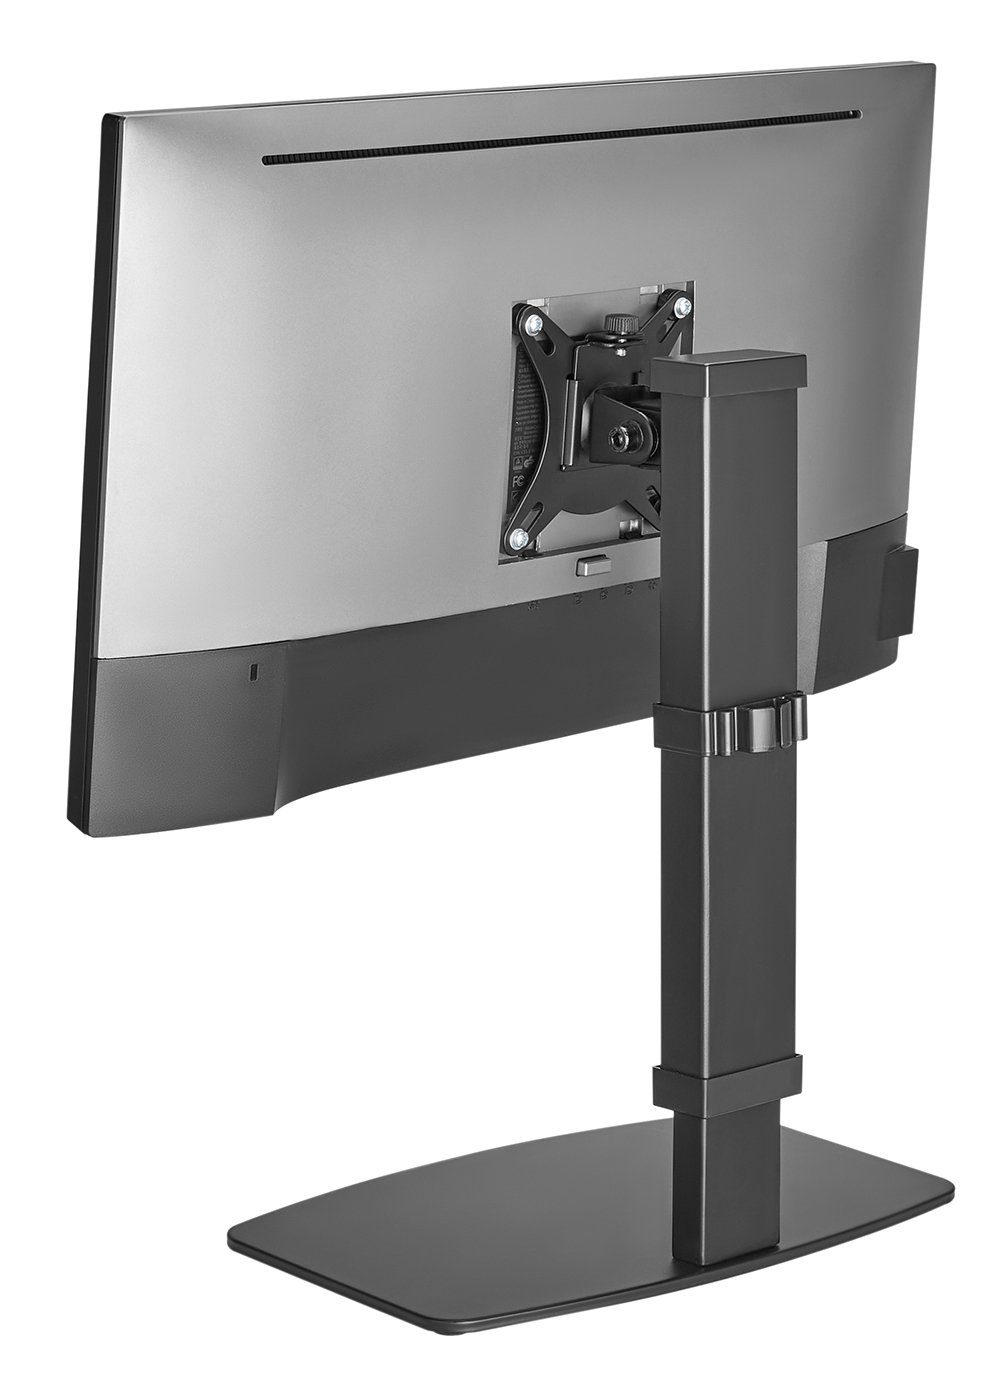 MY WALL HL53L vollbeweglich für 2 x 17-32 Zoll Monitor Halterung, Grau